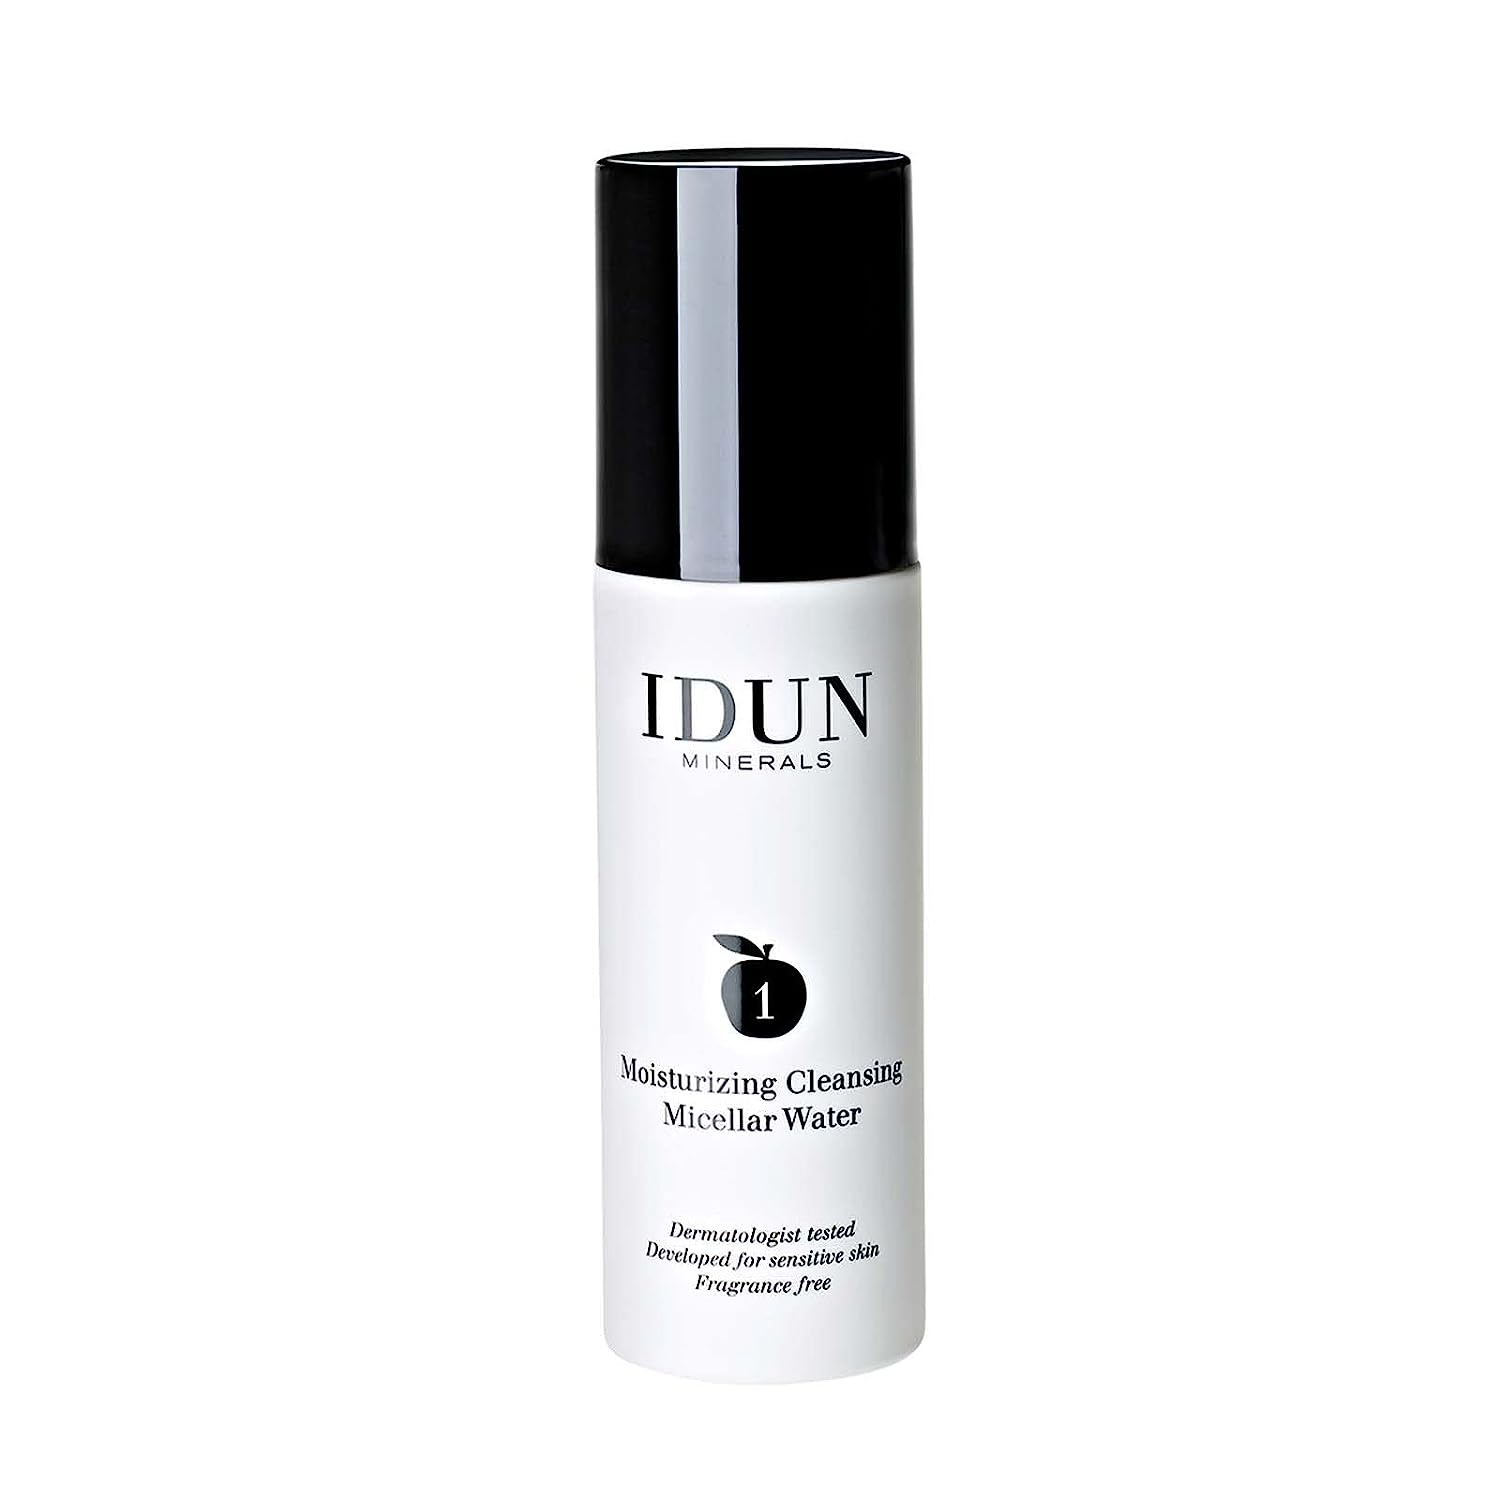 IDUN MINERALS - Moisturizing Cleansing Micellar Water - 150 ml